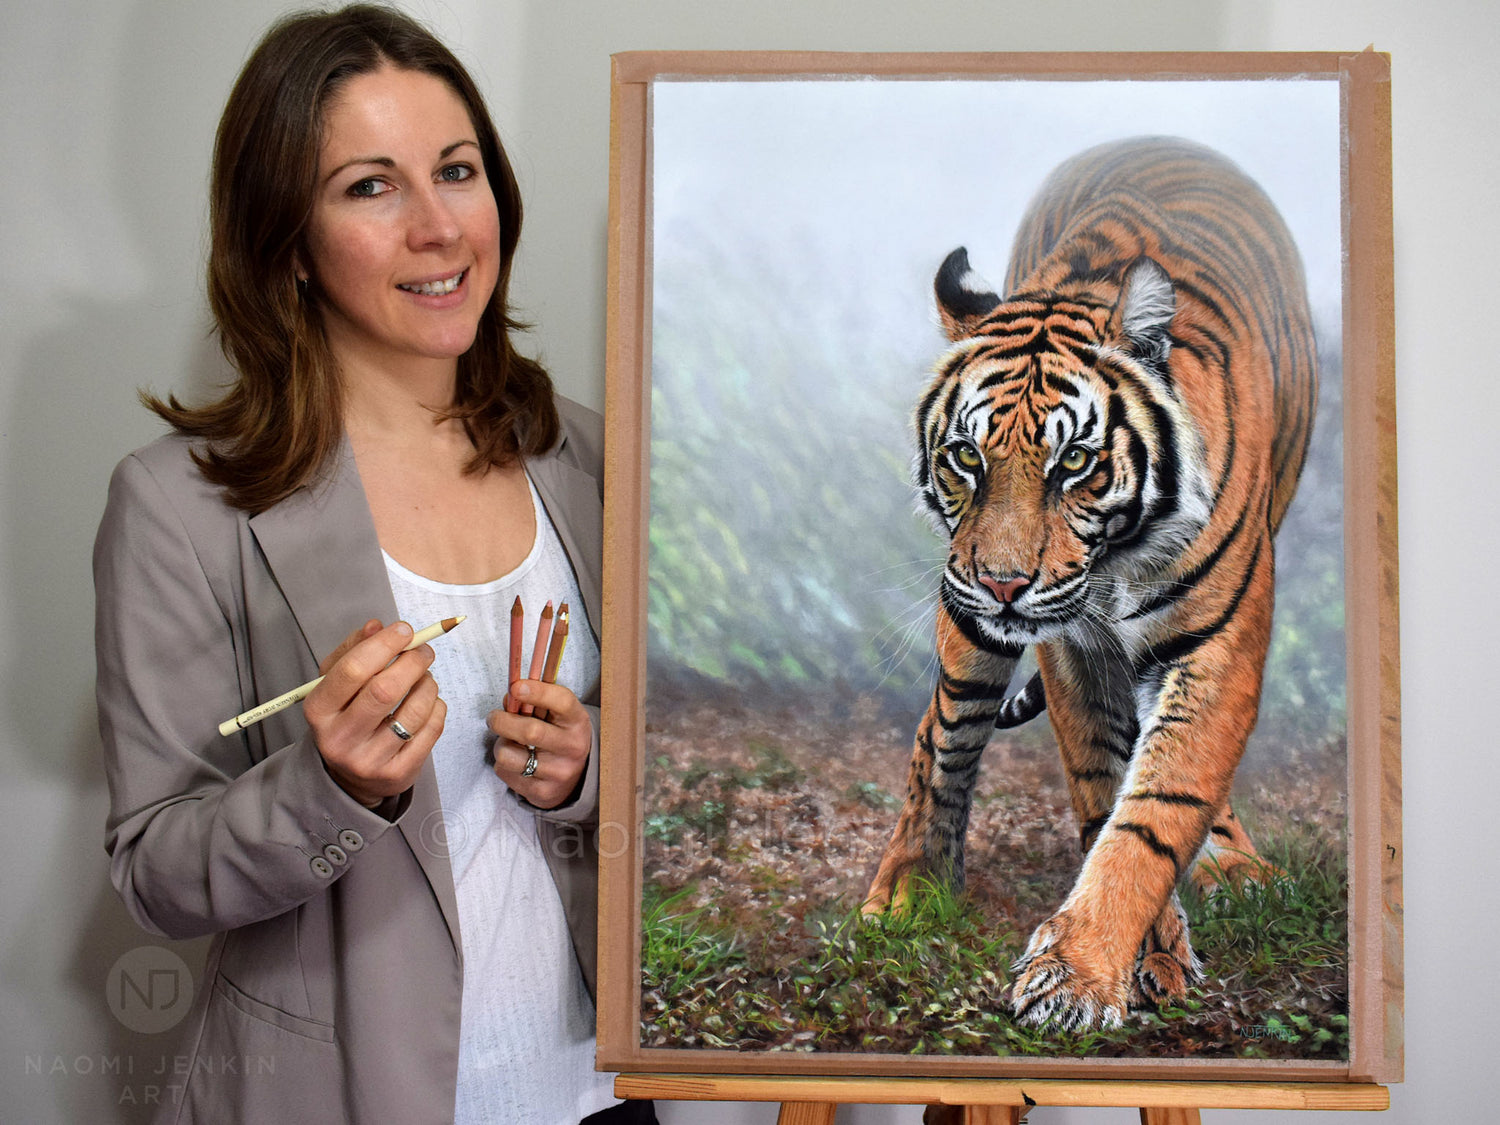 Wildlife artist Naomi Jenkin with original tiger drawing "Stealth".